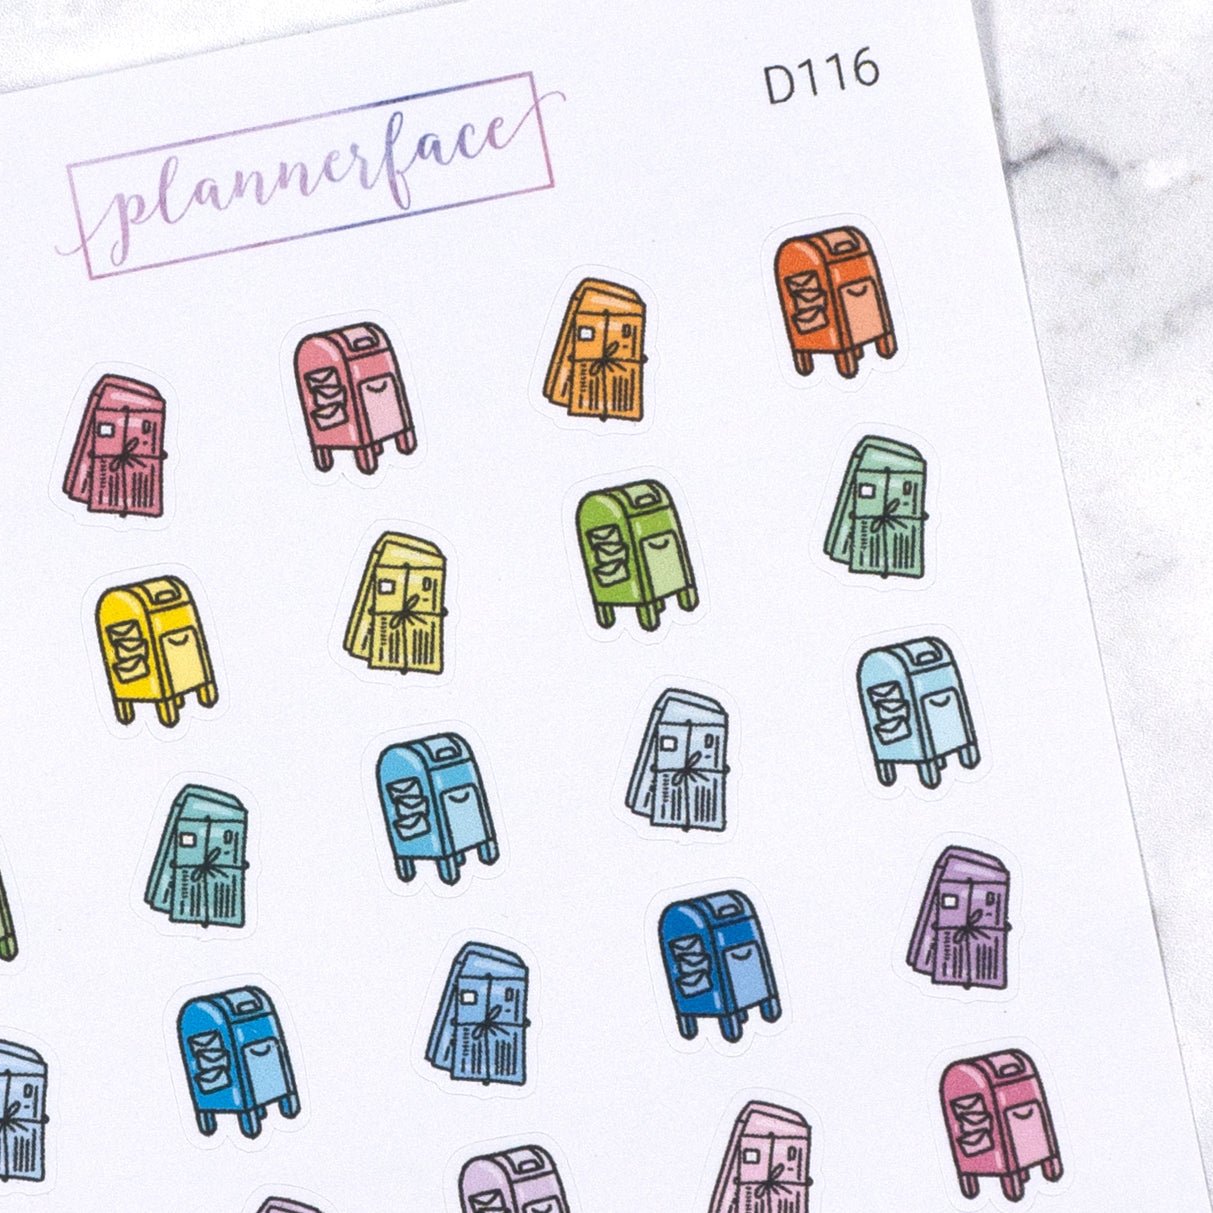 Mail Drop Post Run Multicolour Doodles by Plannerface